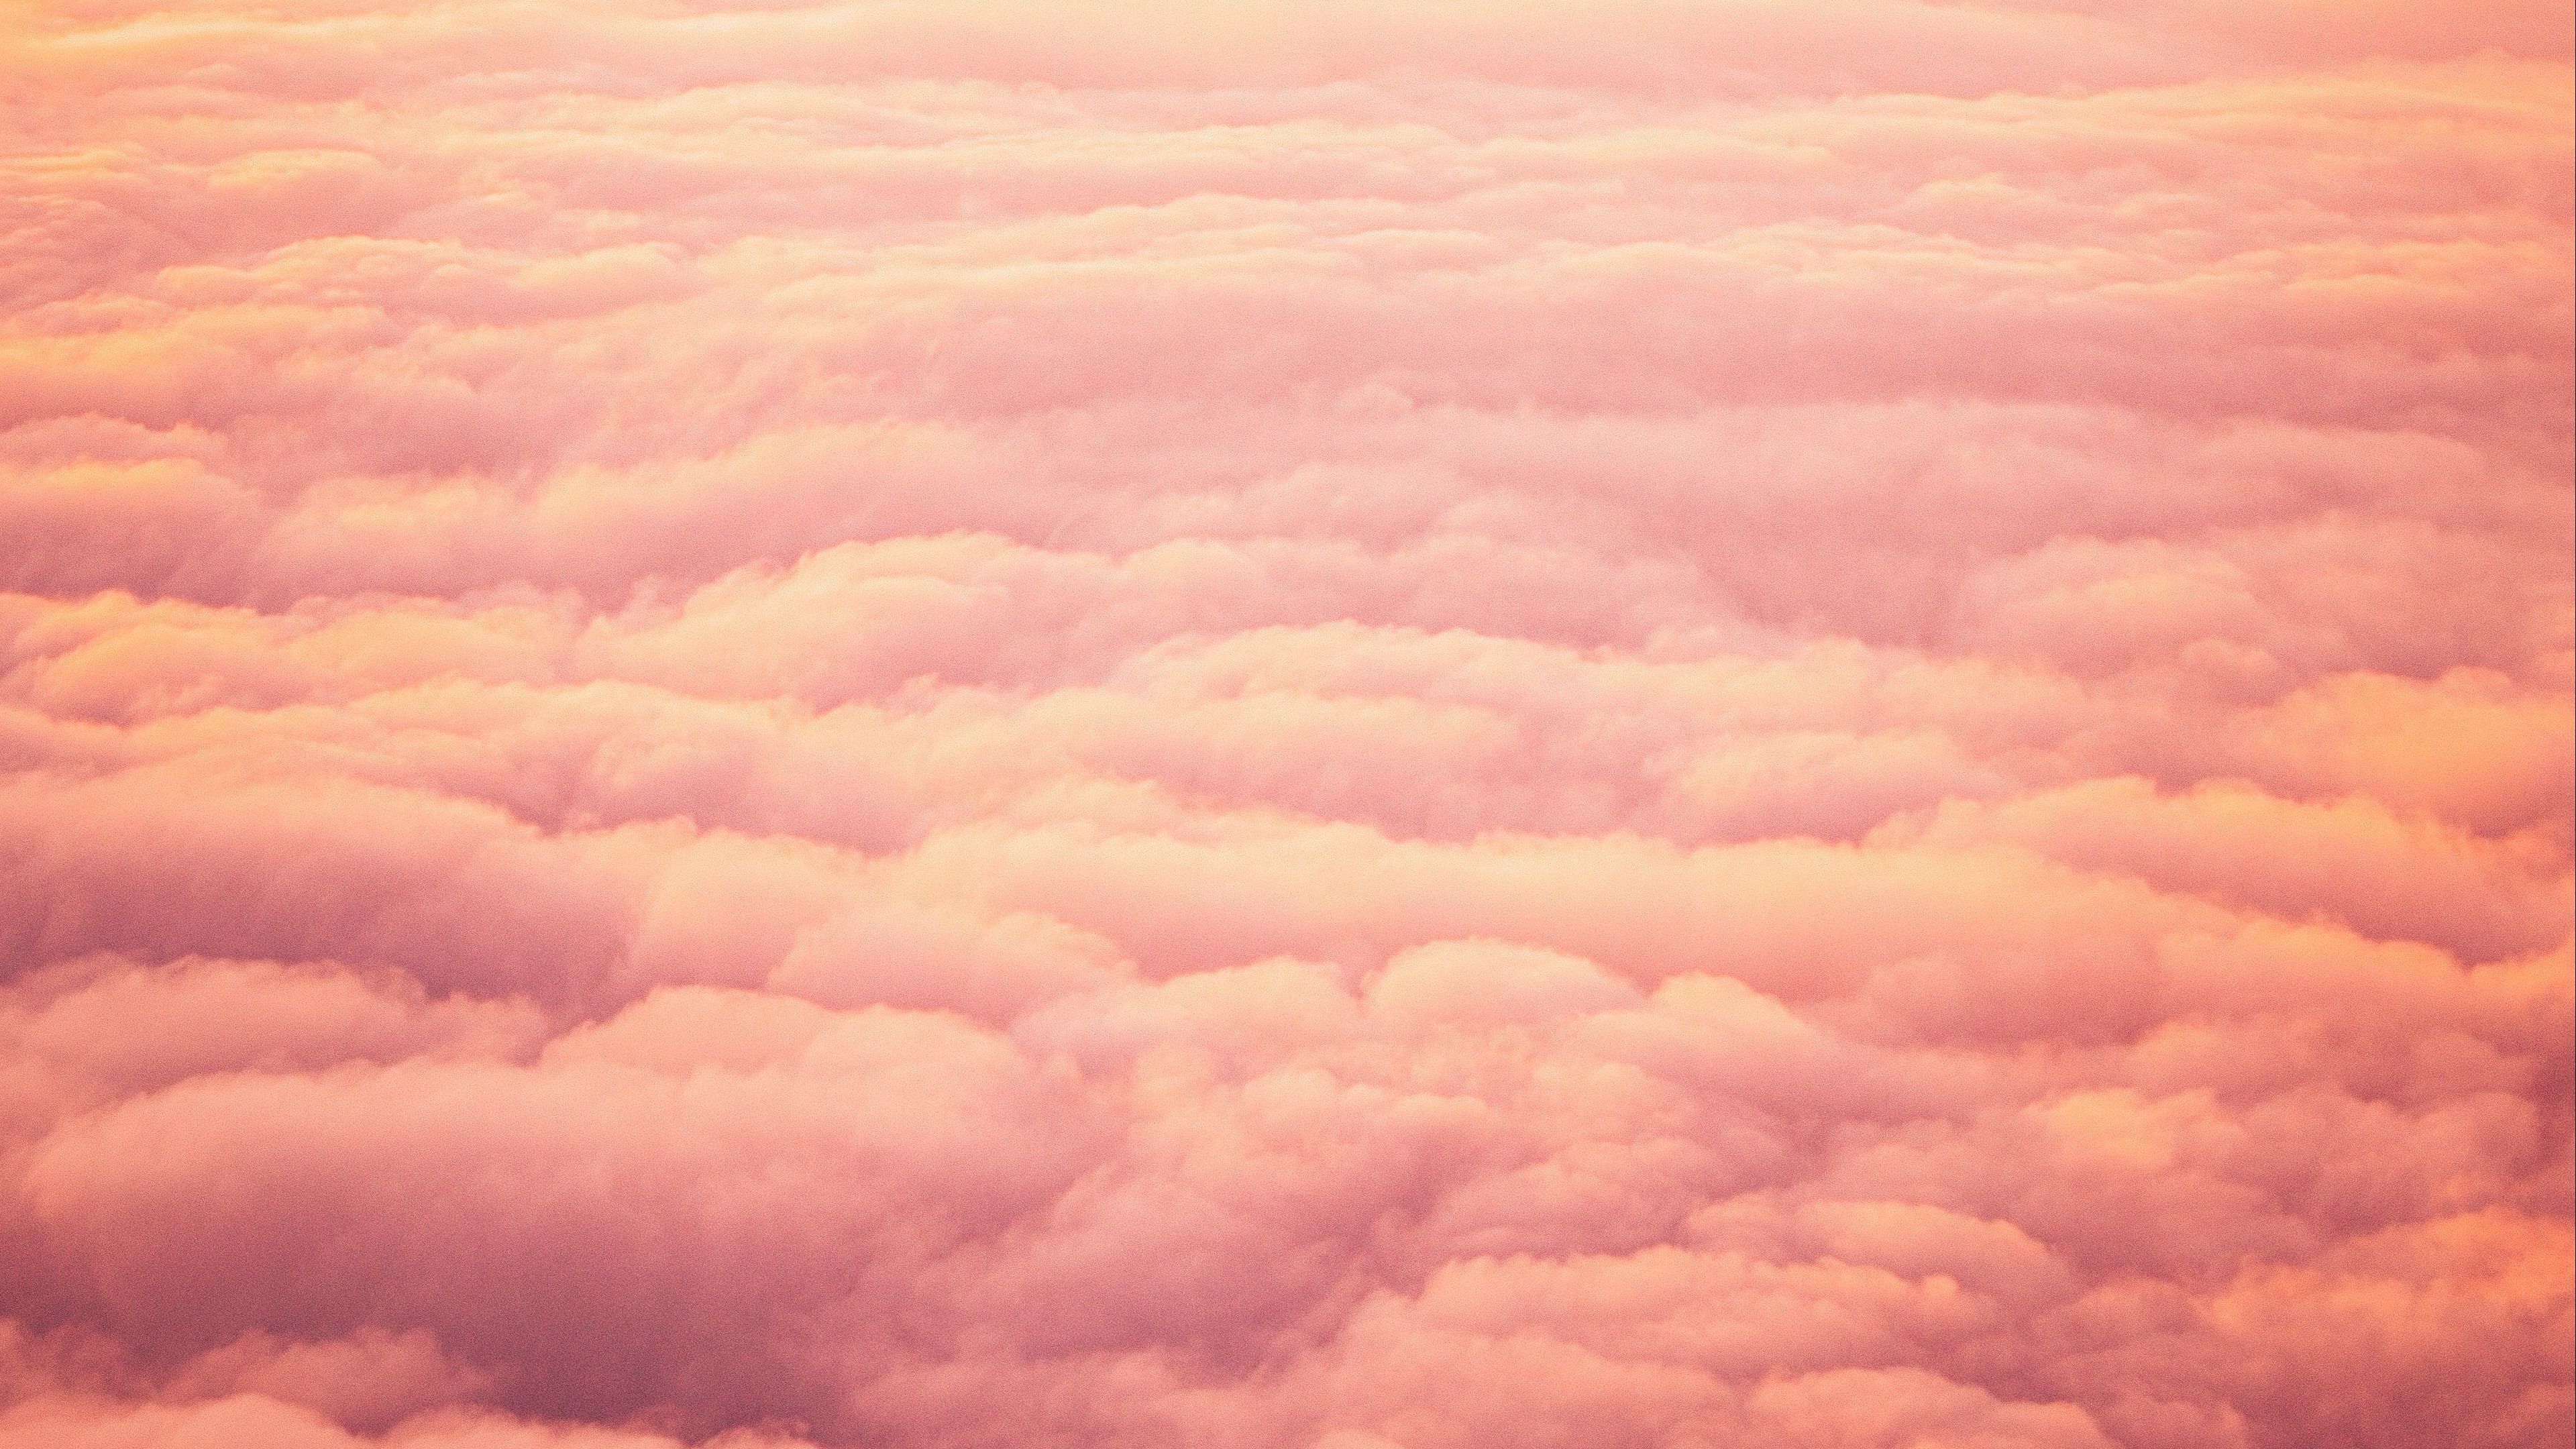 Download wallpaper 3840x2160 clouds, beautiful, sky, sunset, pink 4k uhd 16:9 HD background